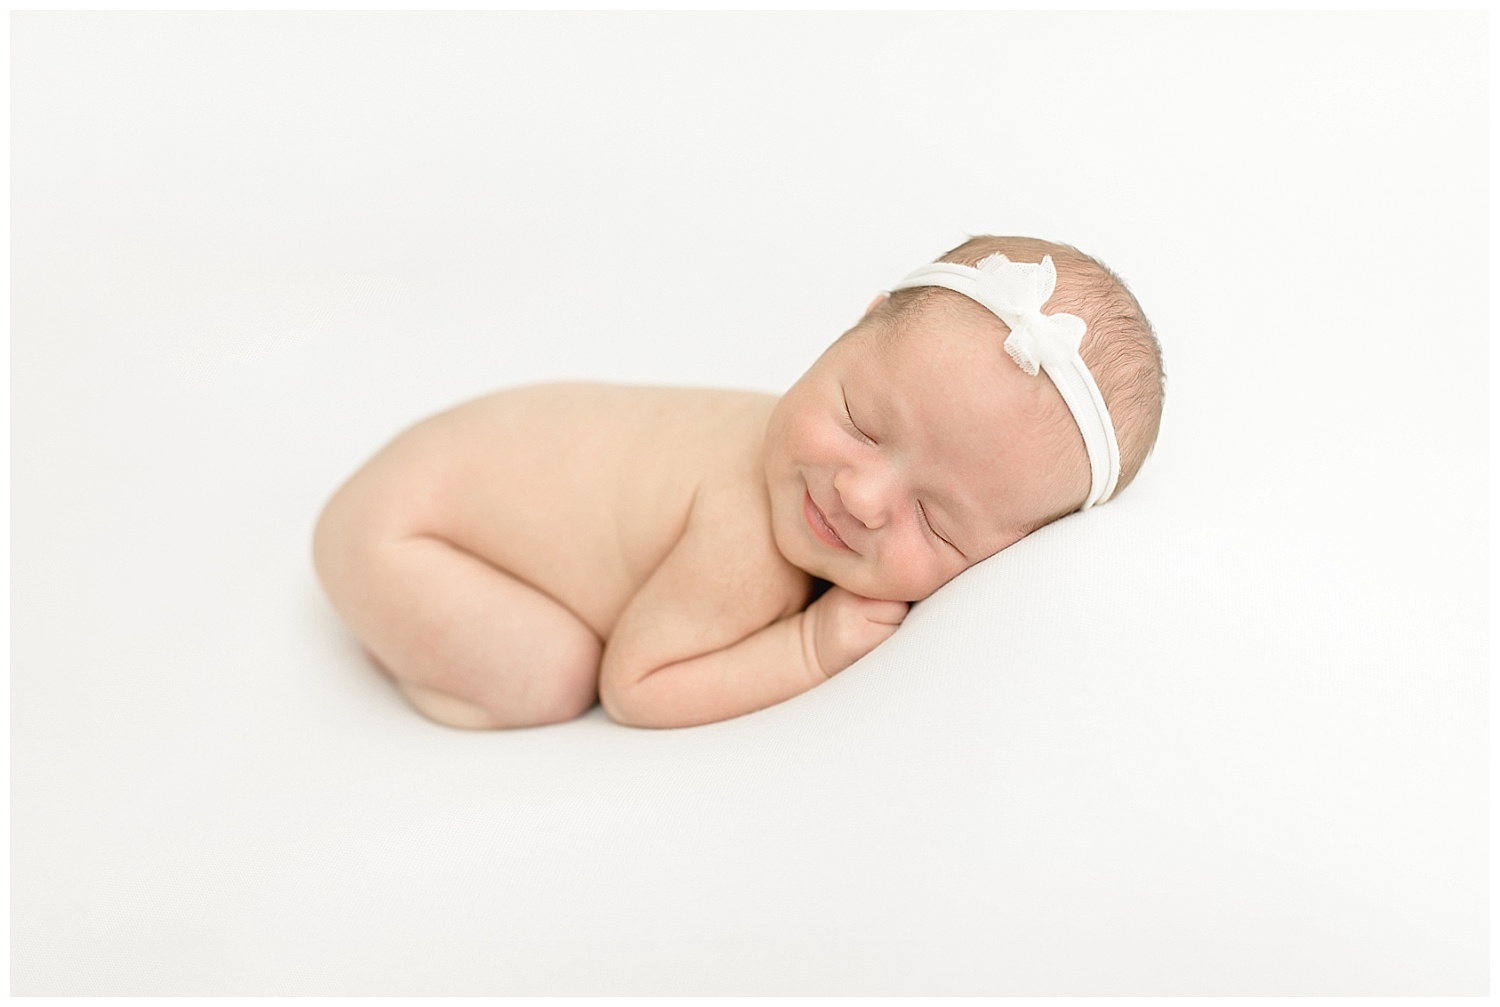 Tampa Natural Light Studio Newborn Photographer